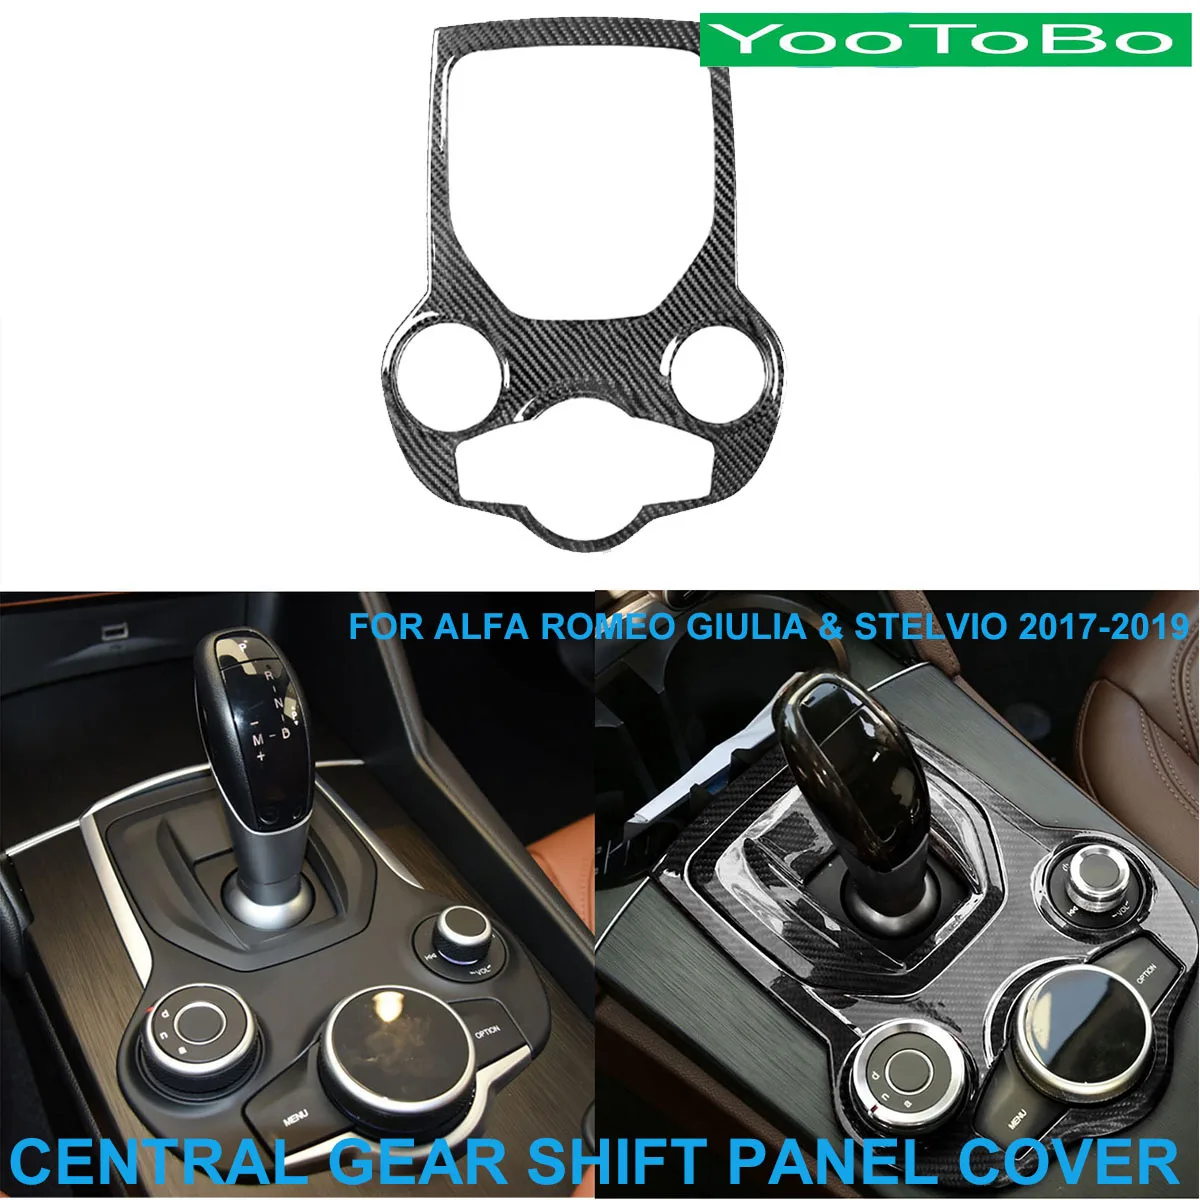 

LHD RHD Car Styling Real Carbon Fiber Central Console Gear Shift Panel Trim Cover Stick For Alfa Romeo Giulia Stelvio 2017-2019